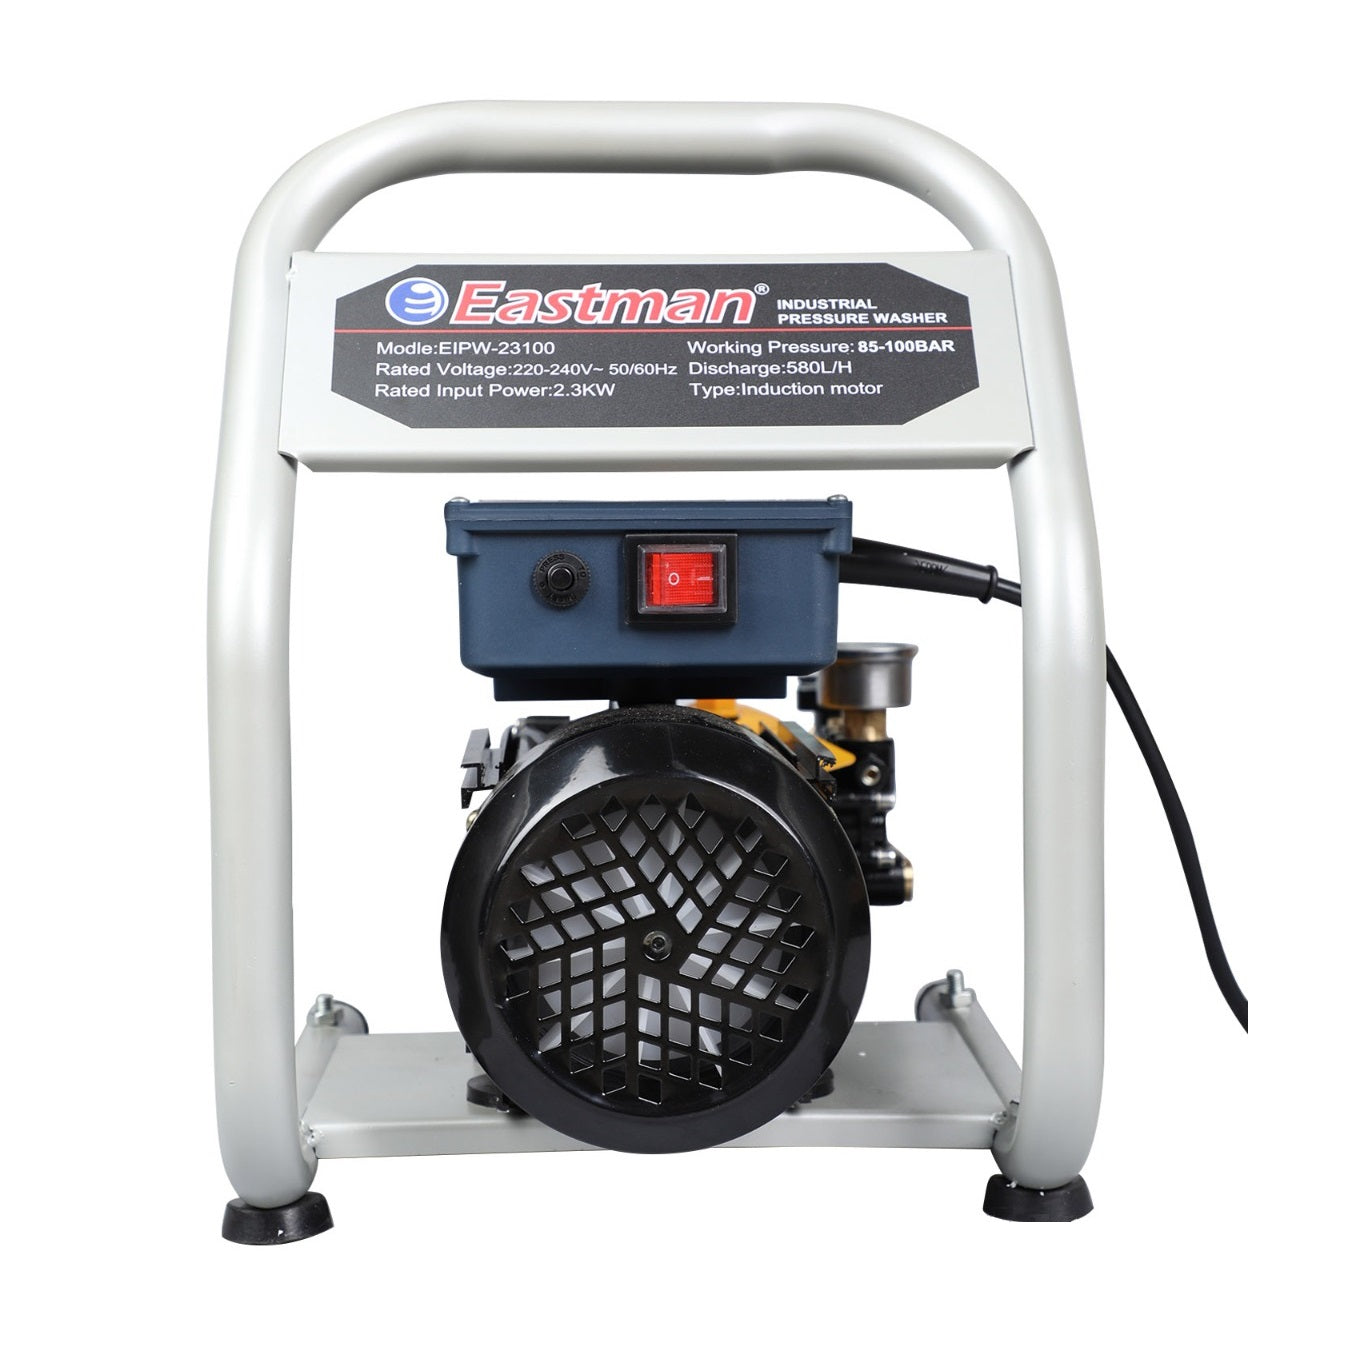 Eastman Industrial Pressure Washer 100 Bar 2300W EIPW-23100